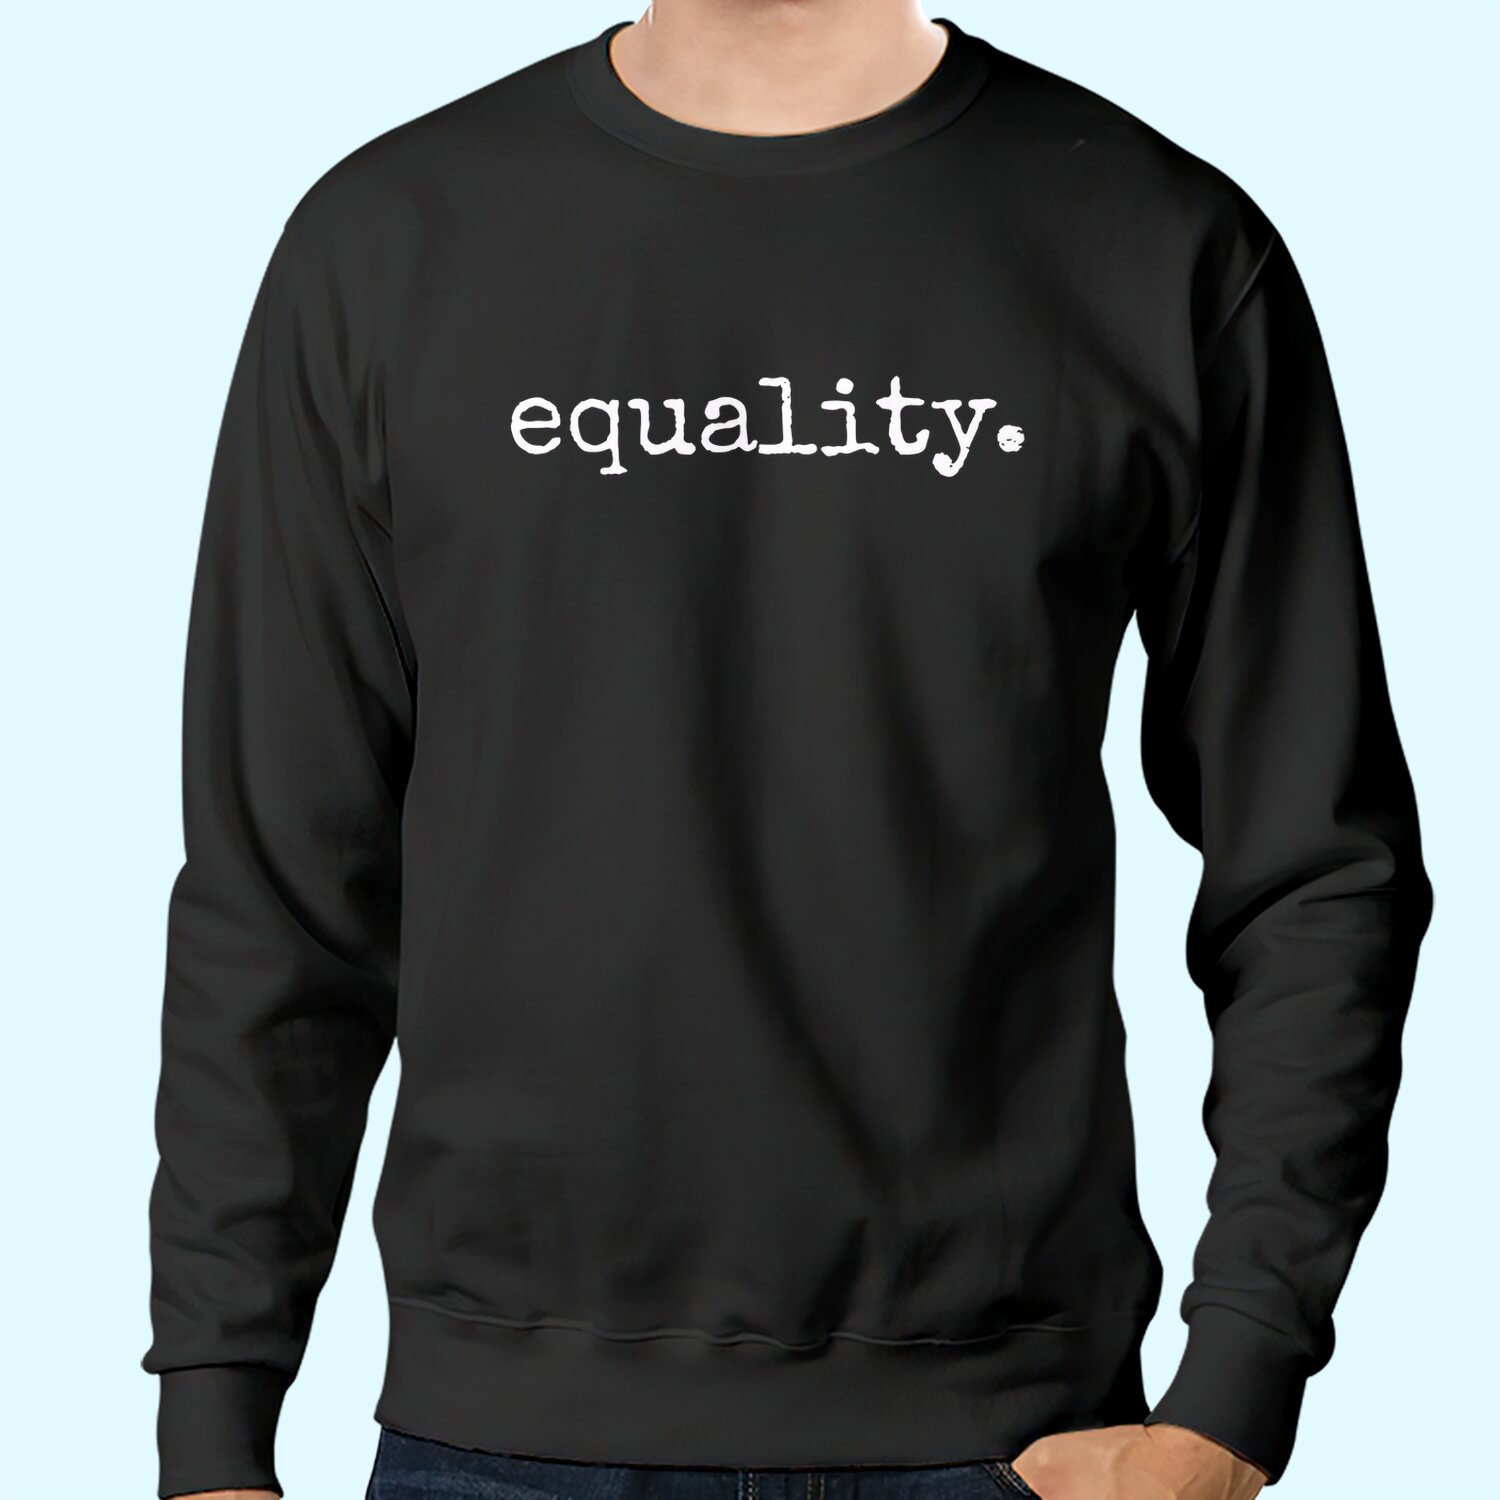 Equality Sweatshirt - Equal Human Rights Liberty Justice Peace